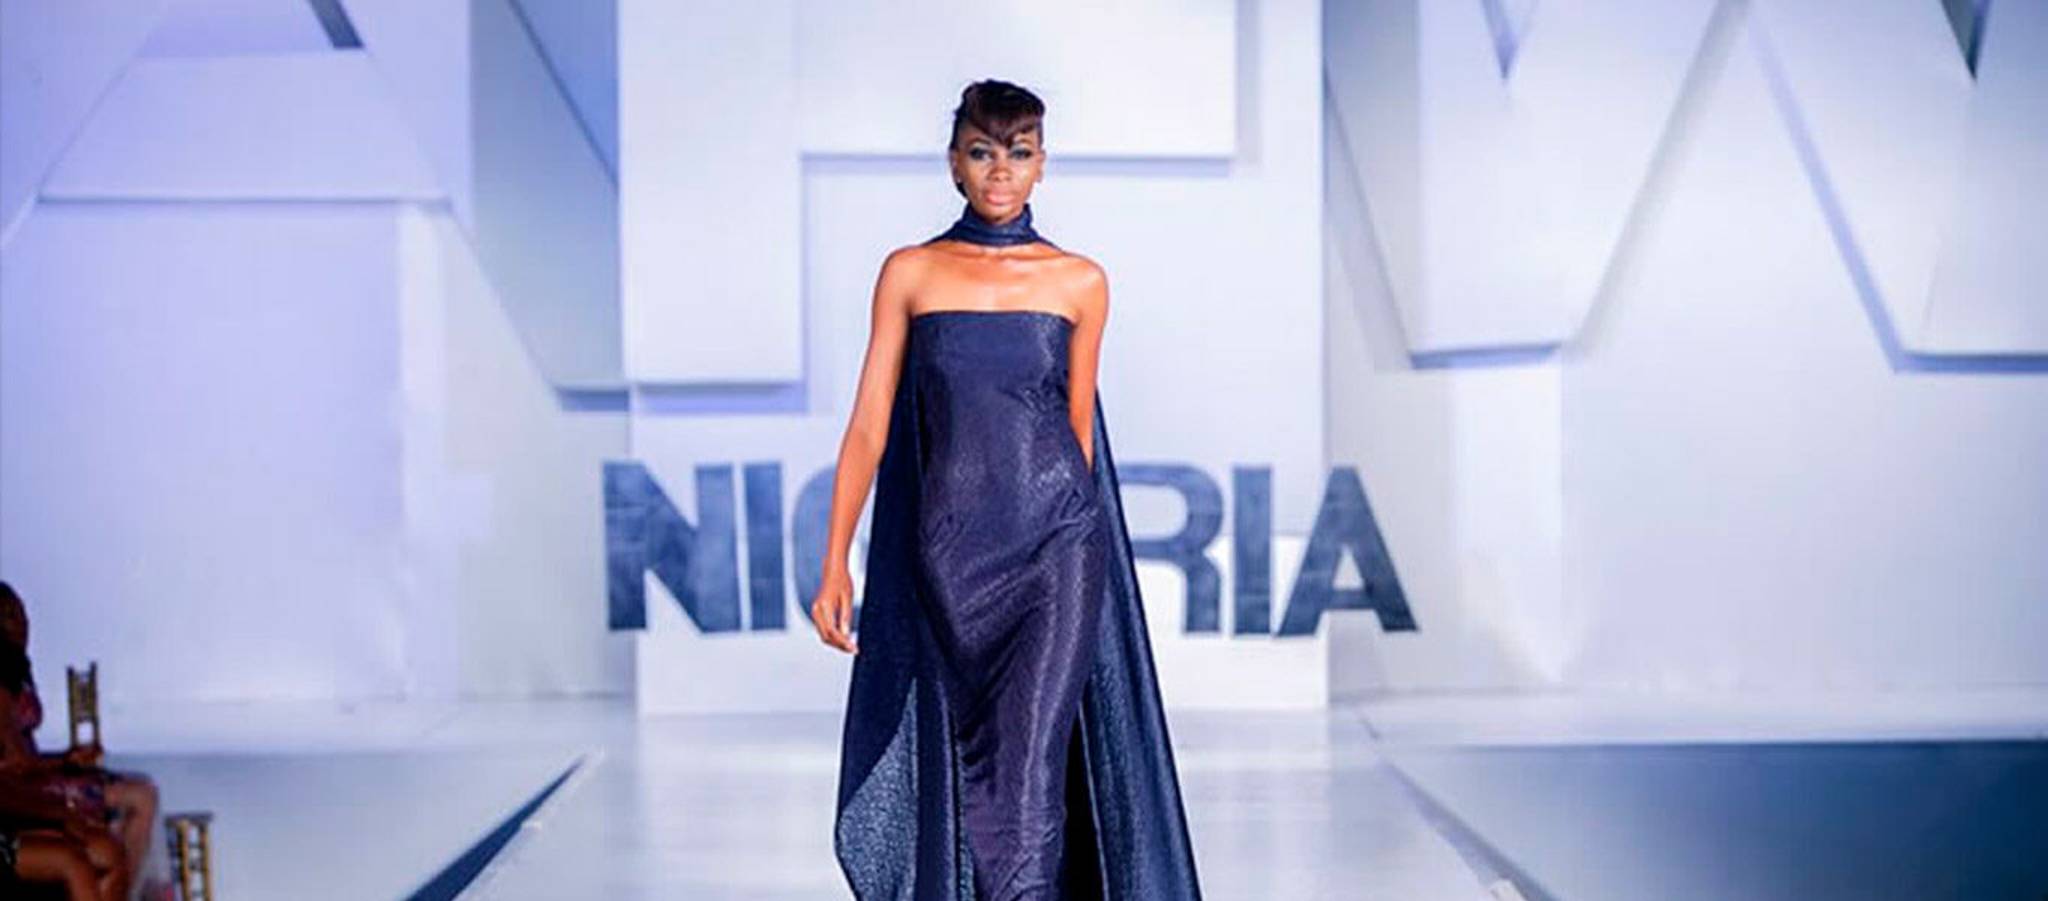 Africa Fashion Week Brazil hypes cross-cultural fashion